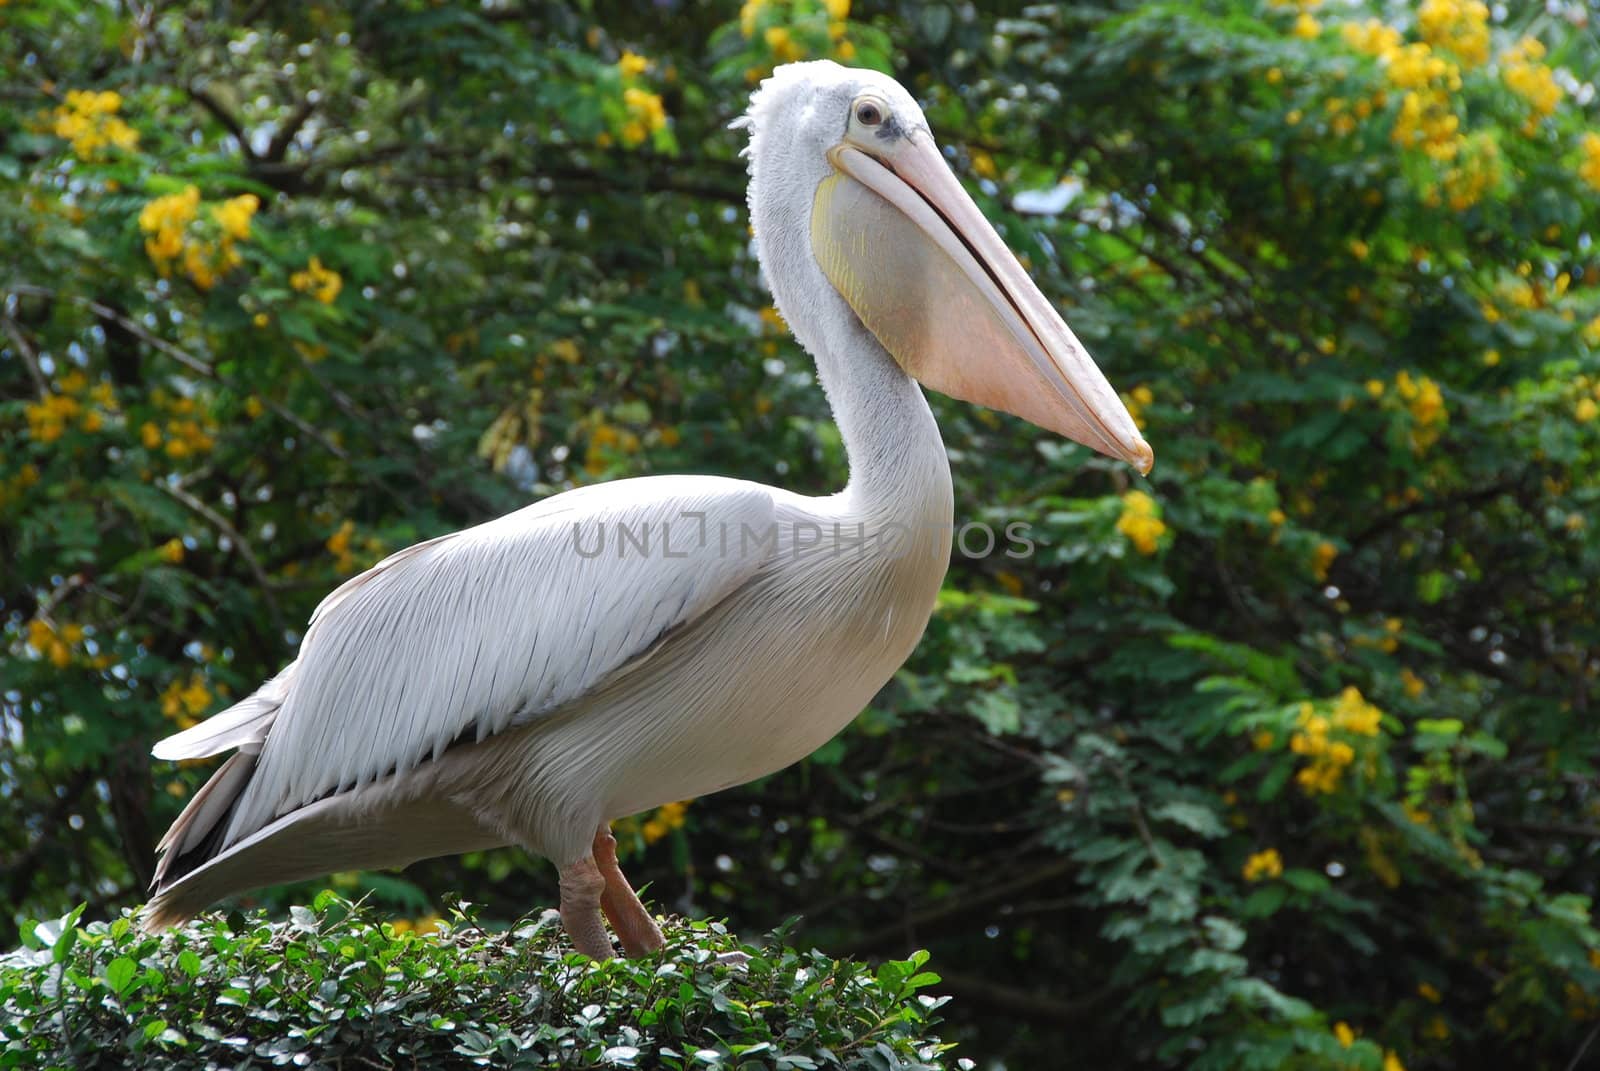 Close-up of a pelican at a zoo